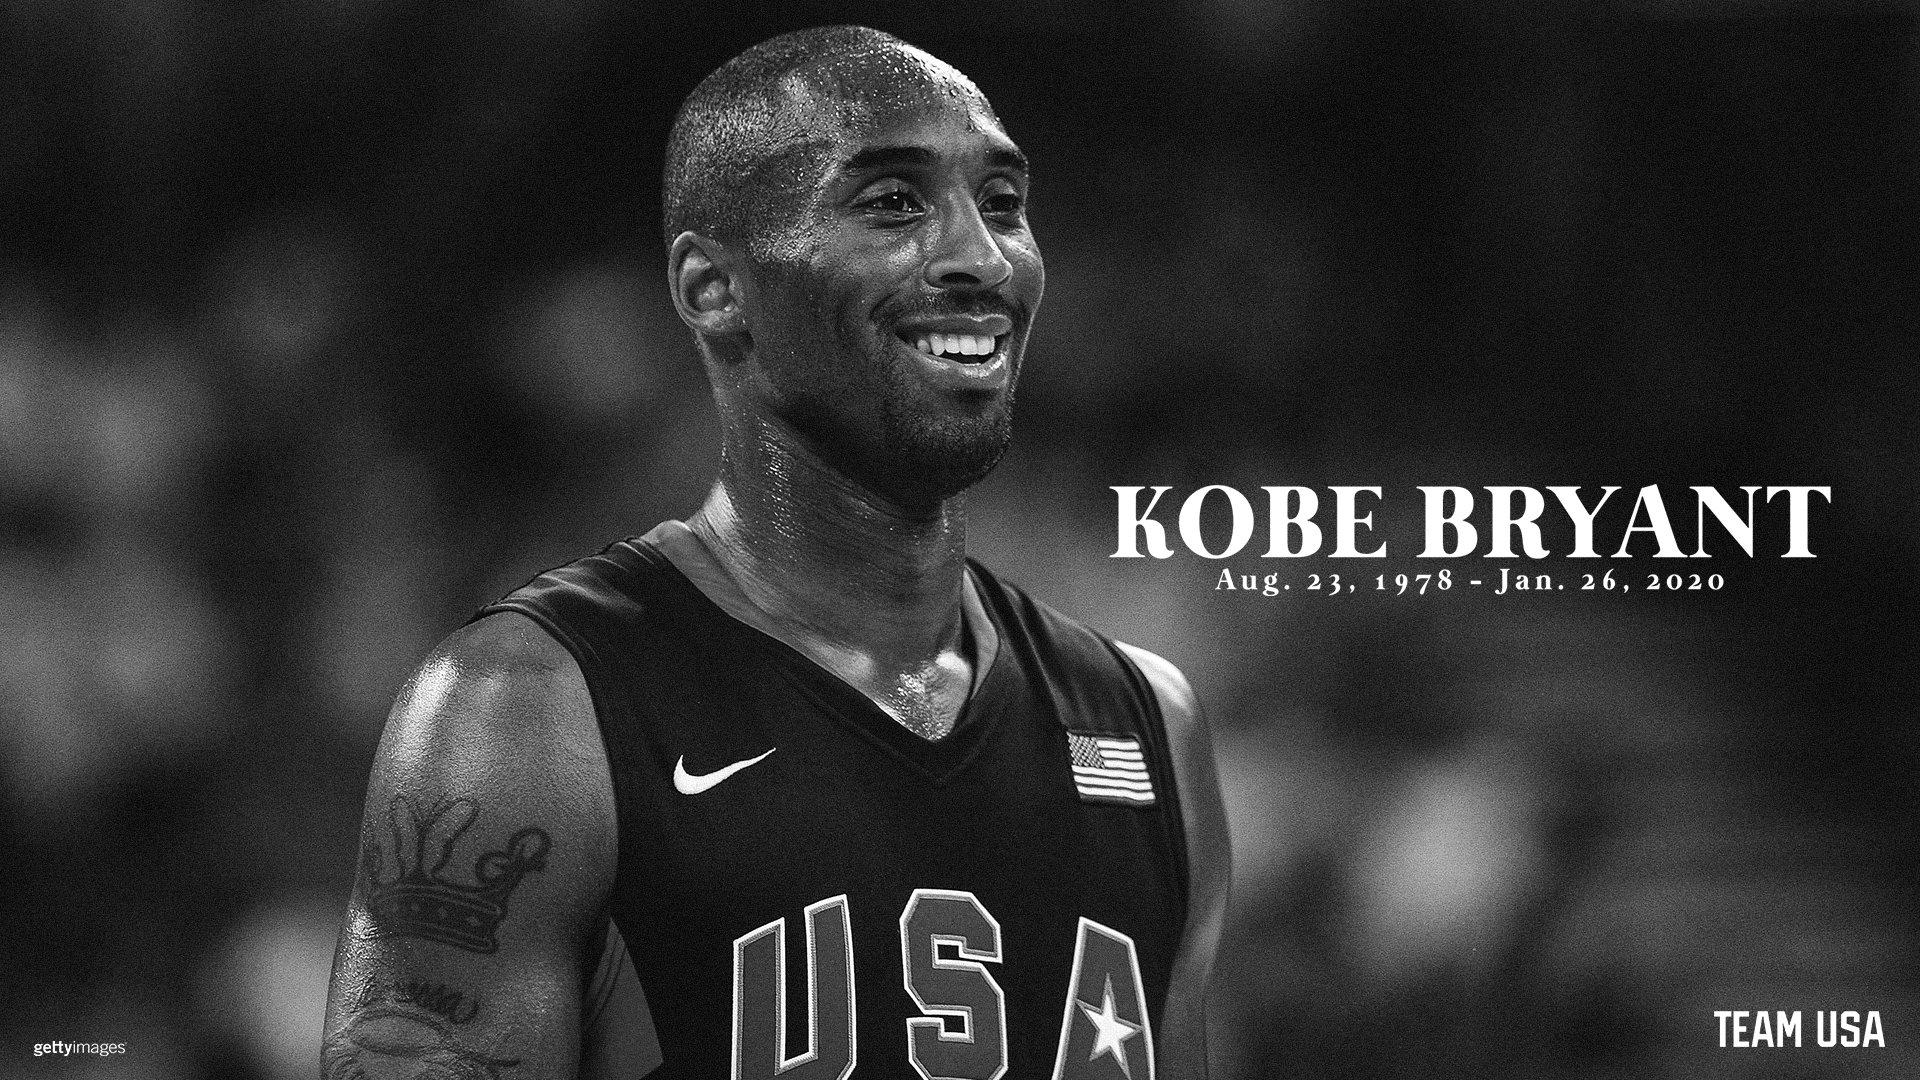 Team USA. Rest In Peace, Kobe Bryant